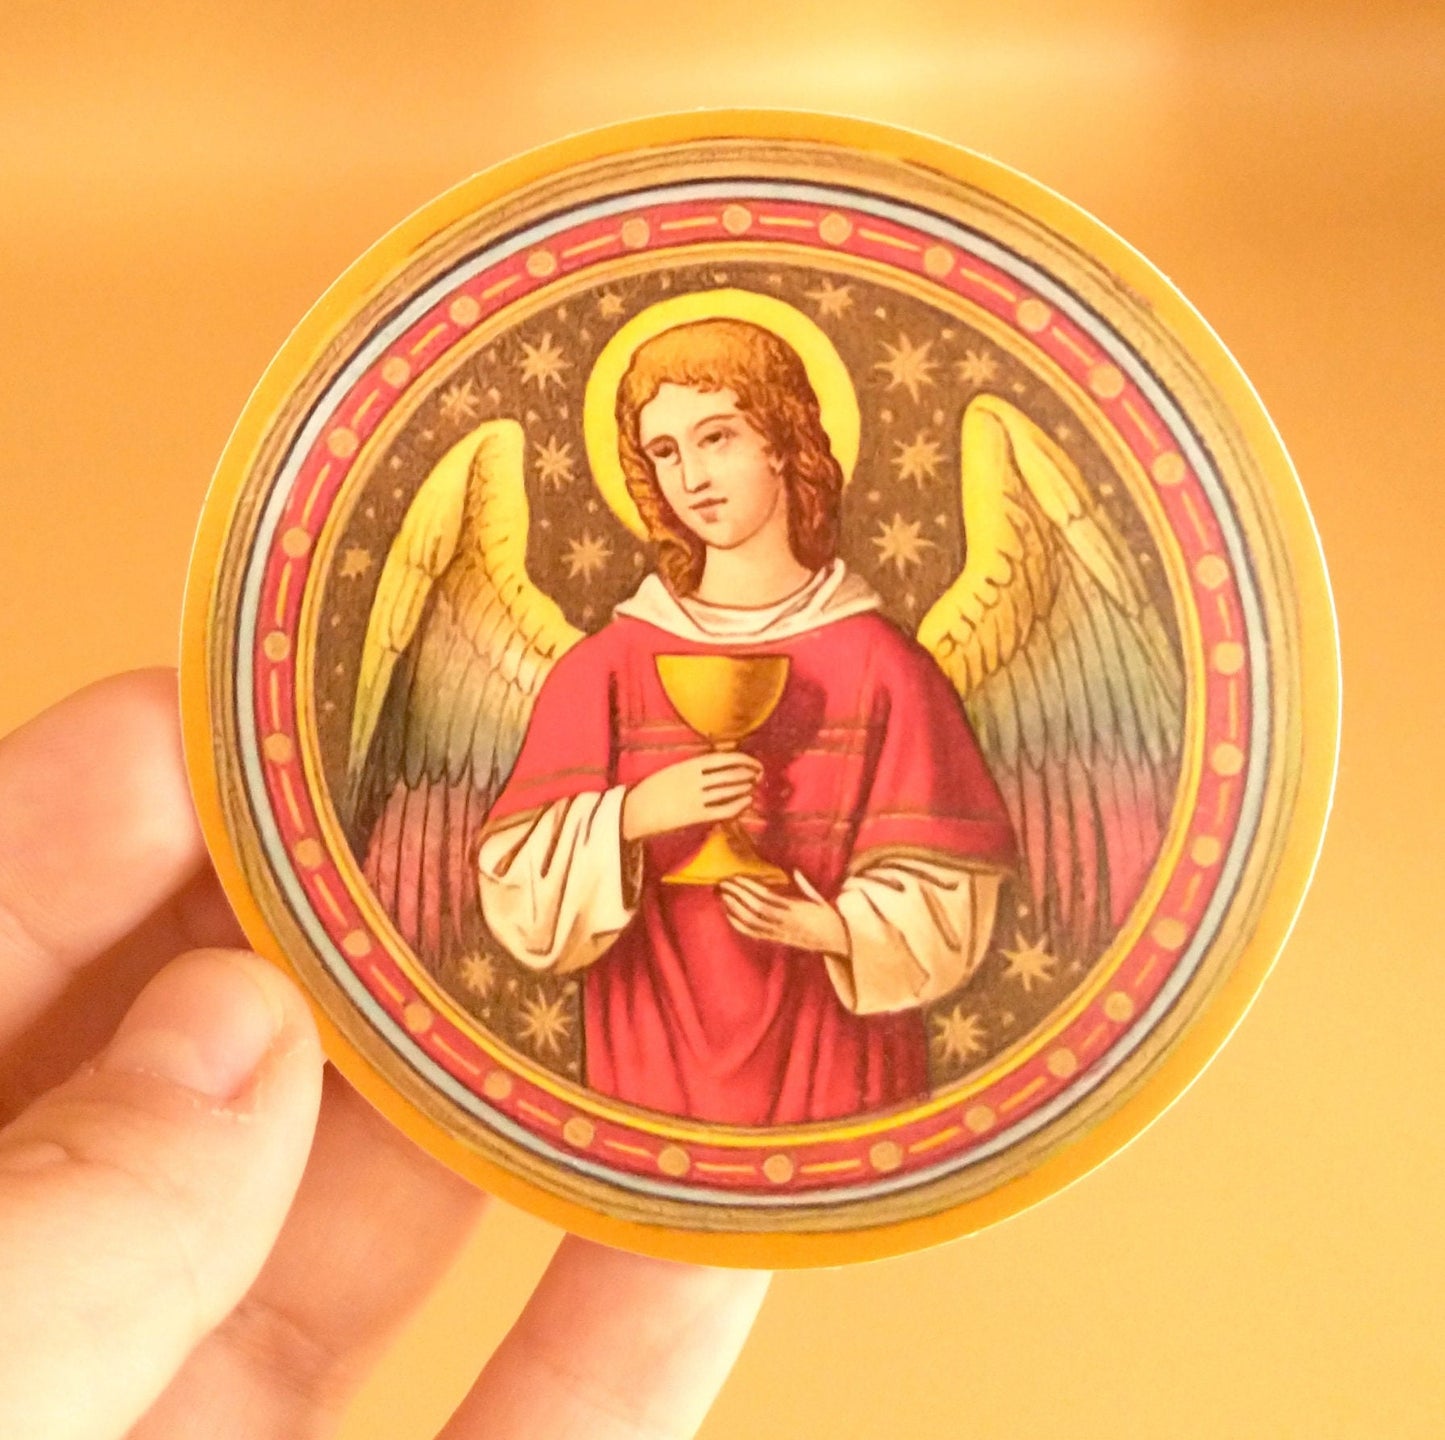 Sticker–Eucharistic Angel – by Max Schmalzl – Catholic Sticker – High Quality Vinyl